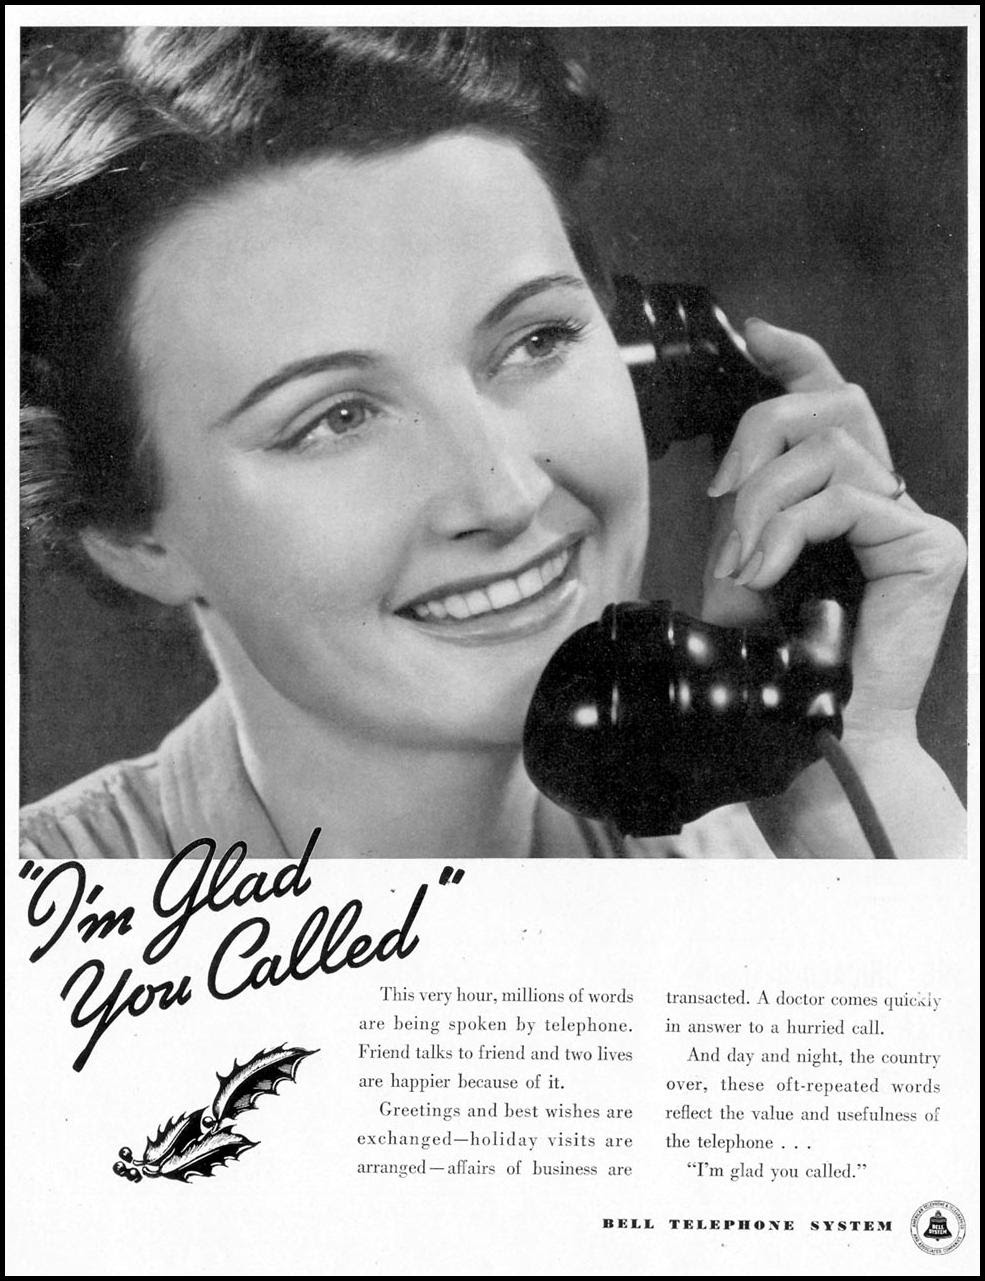 TELEPHONE SYSTEM
LIFE
12/12/1938
p. 14